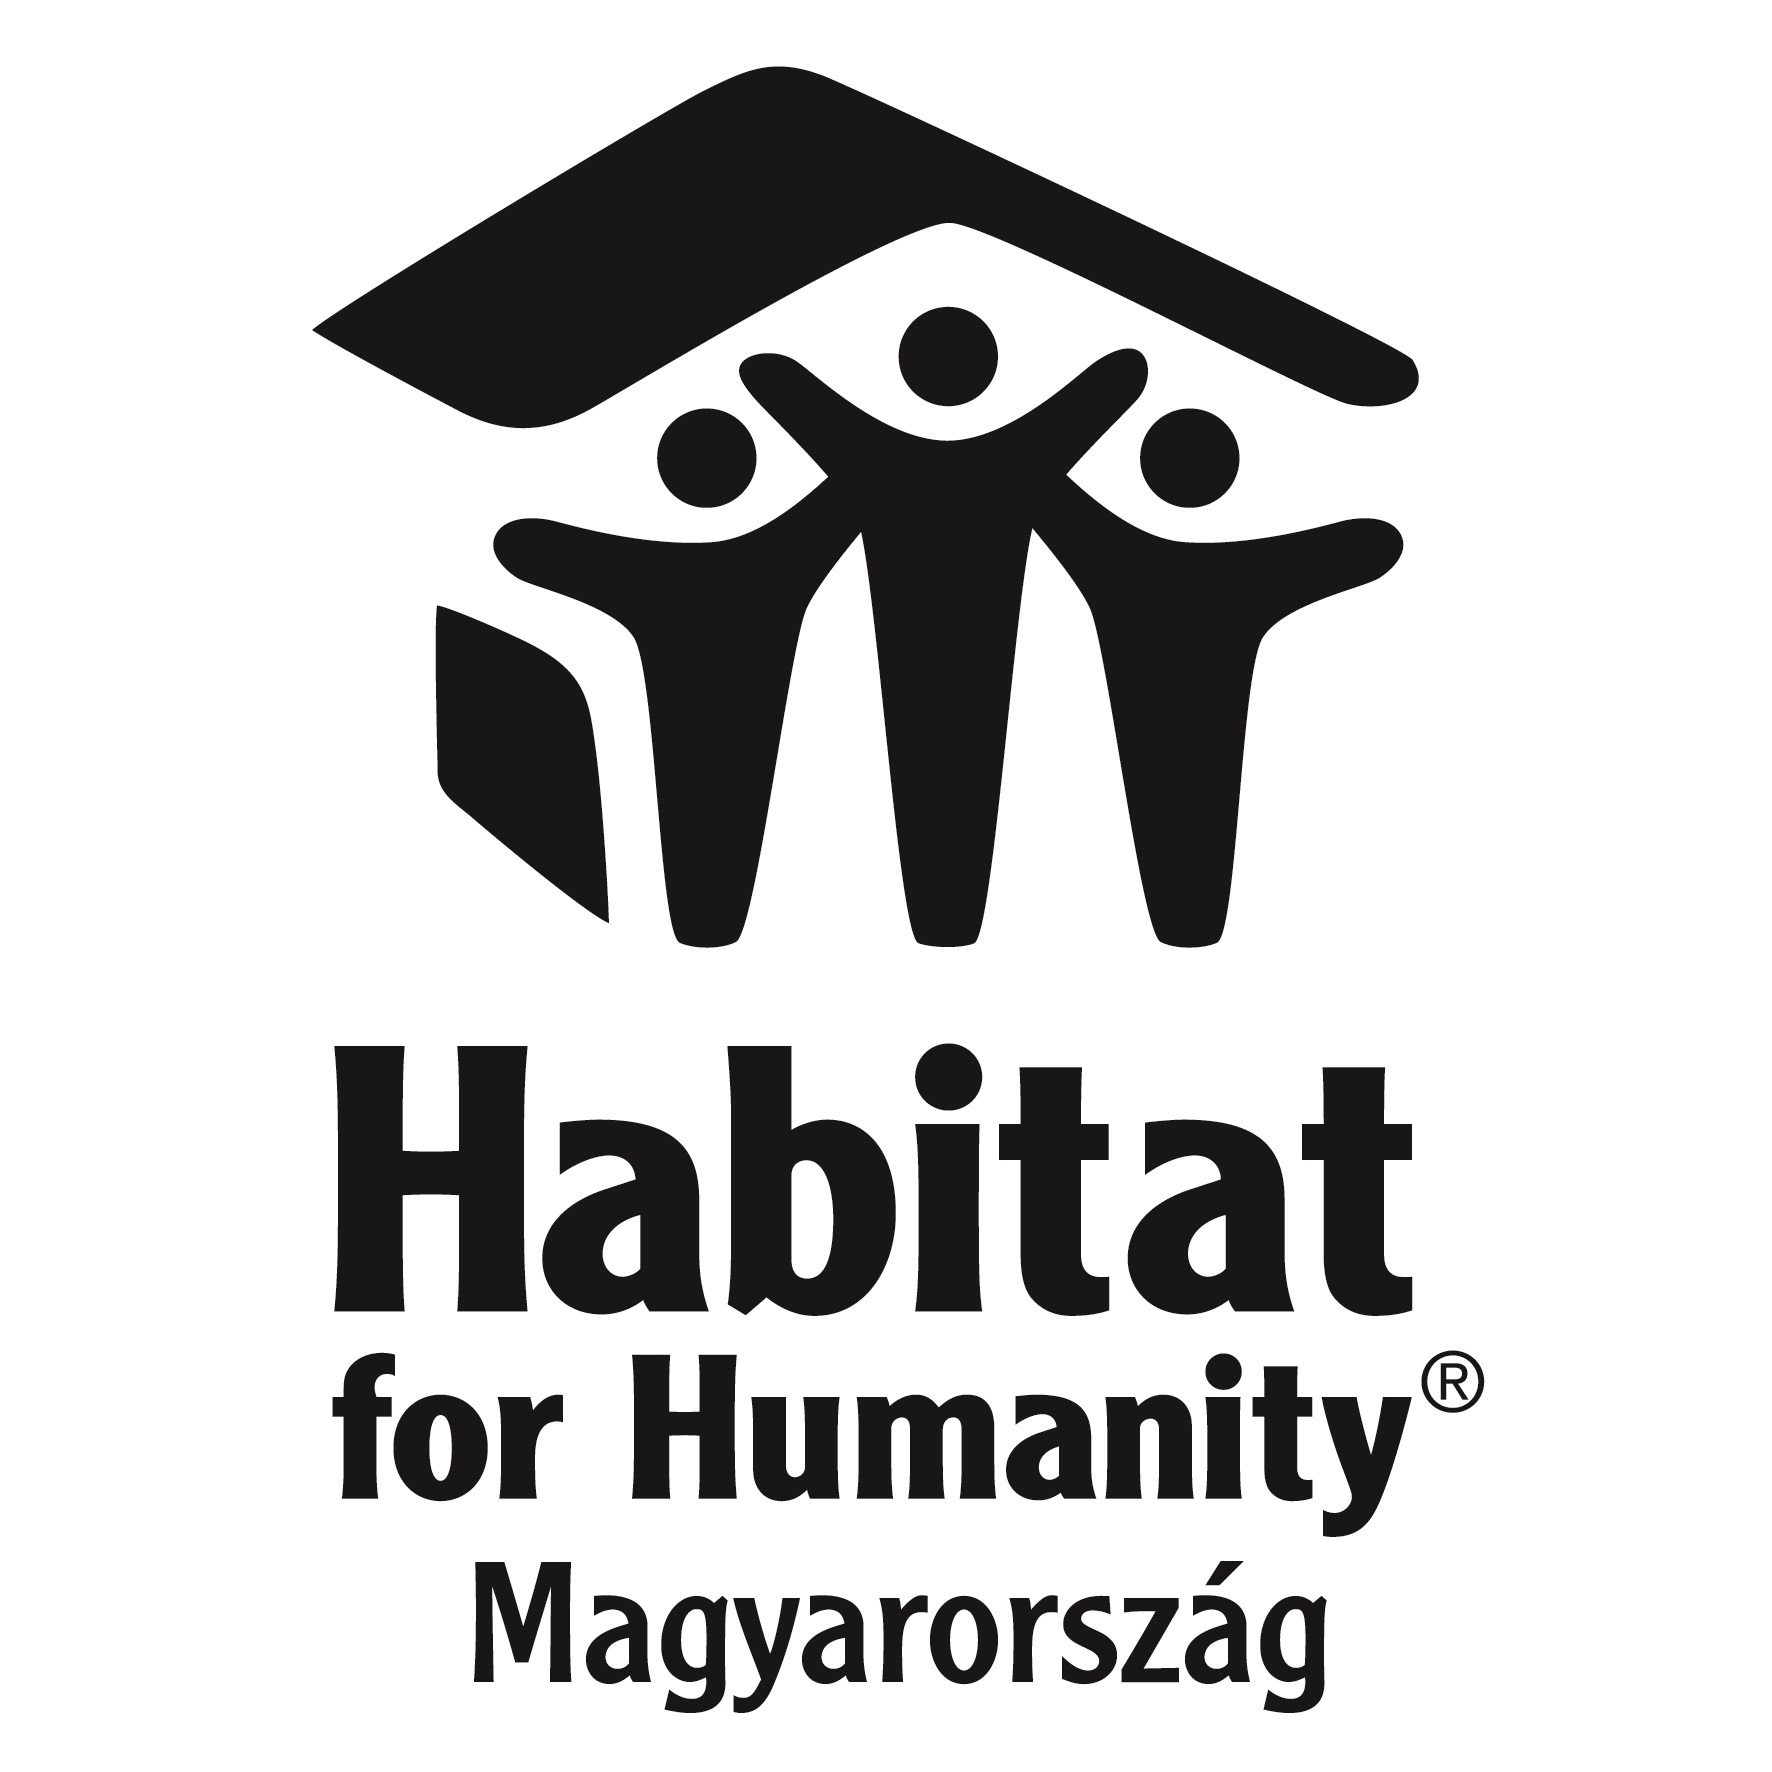 HFH Magyarorszag_Vertical_black_logo